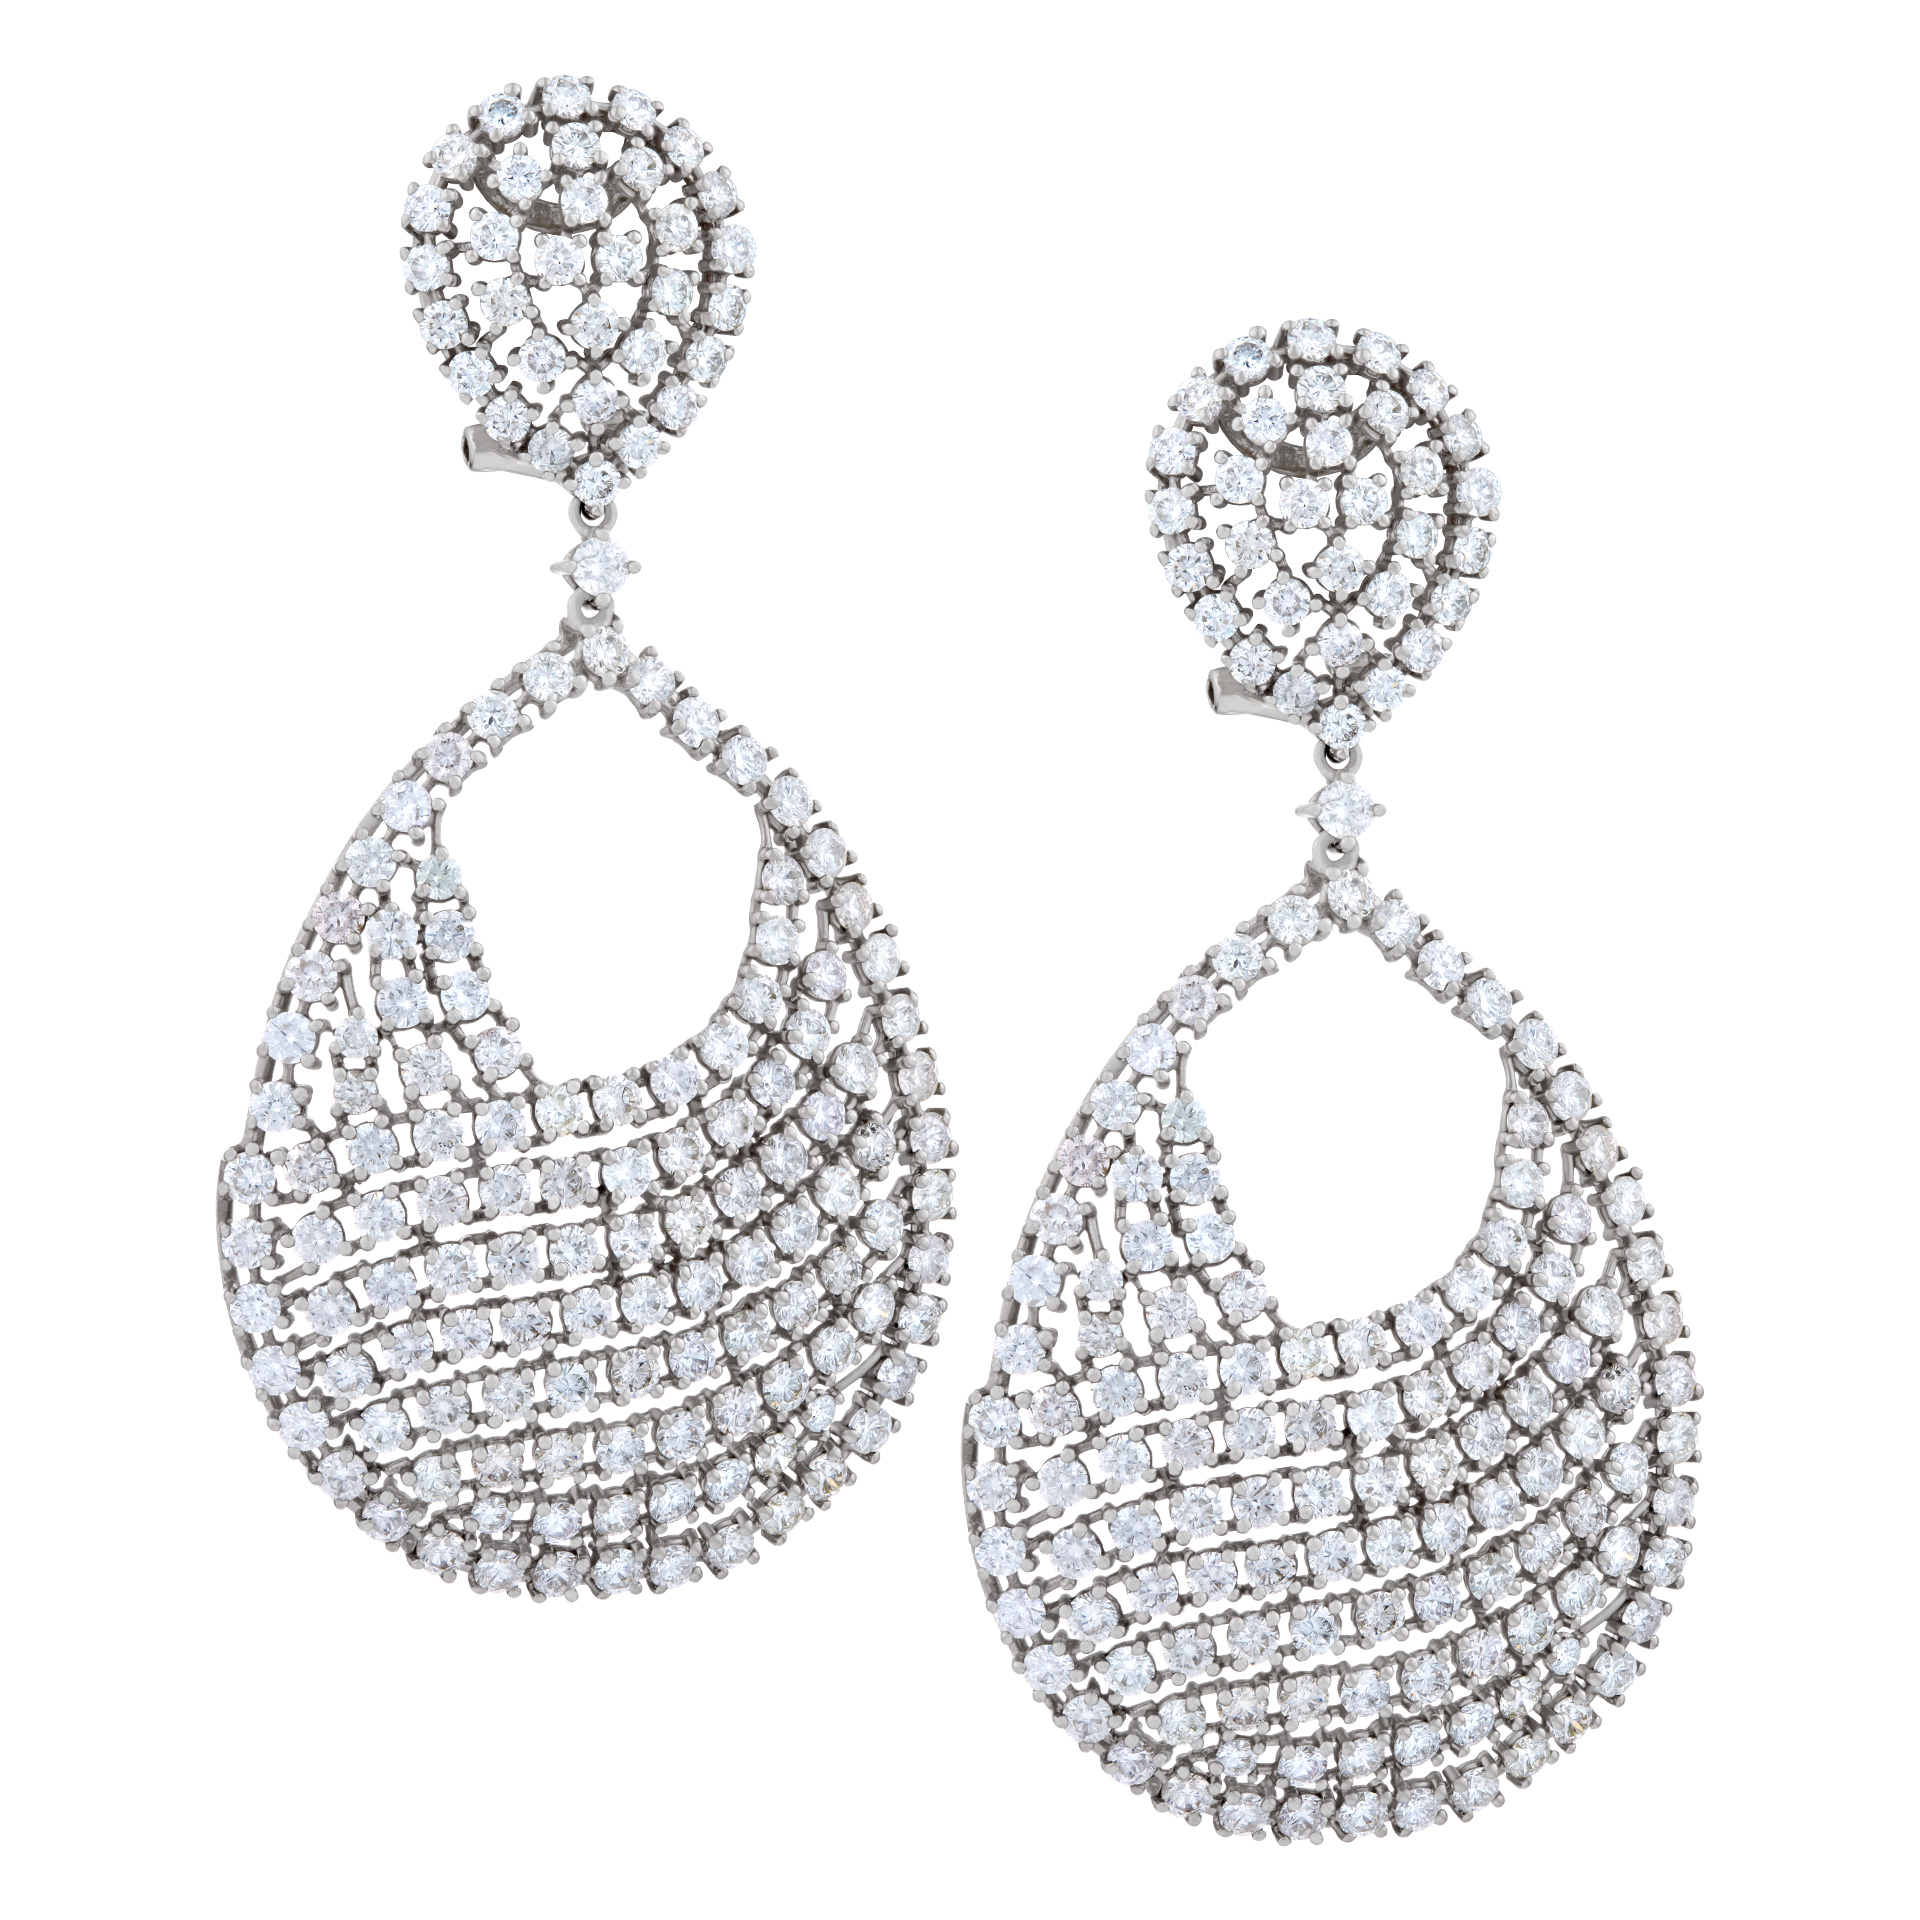 Ladies diamond earrings set in 18 k white gold